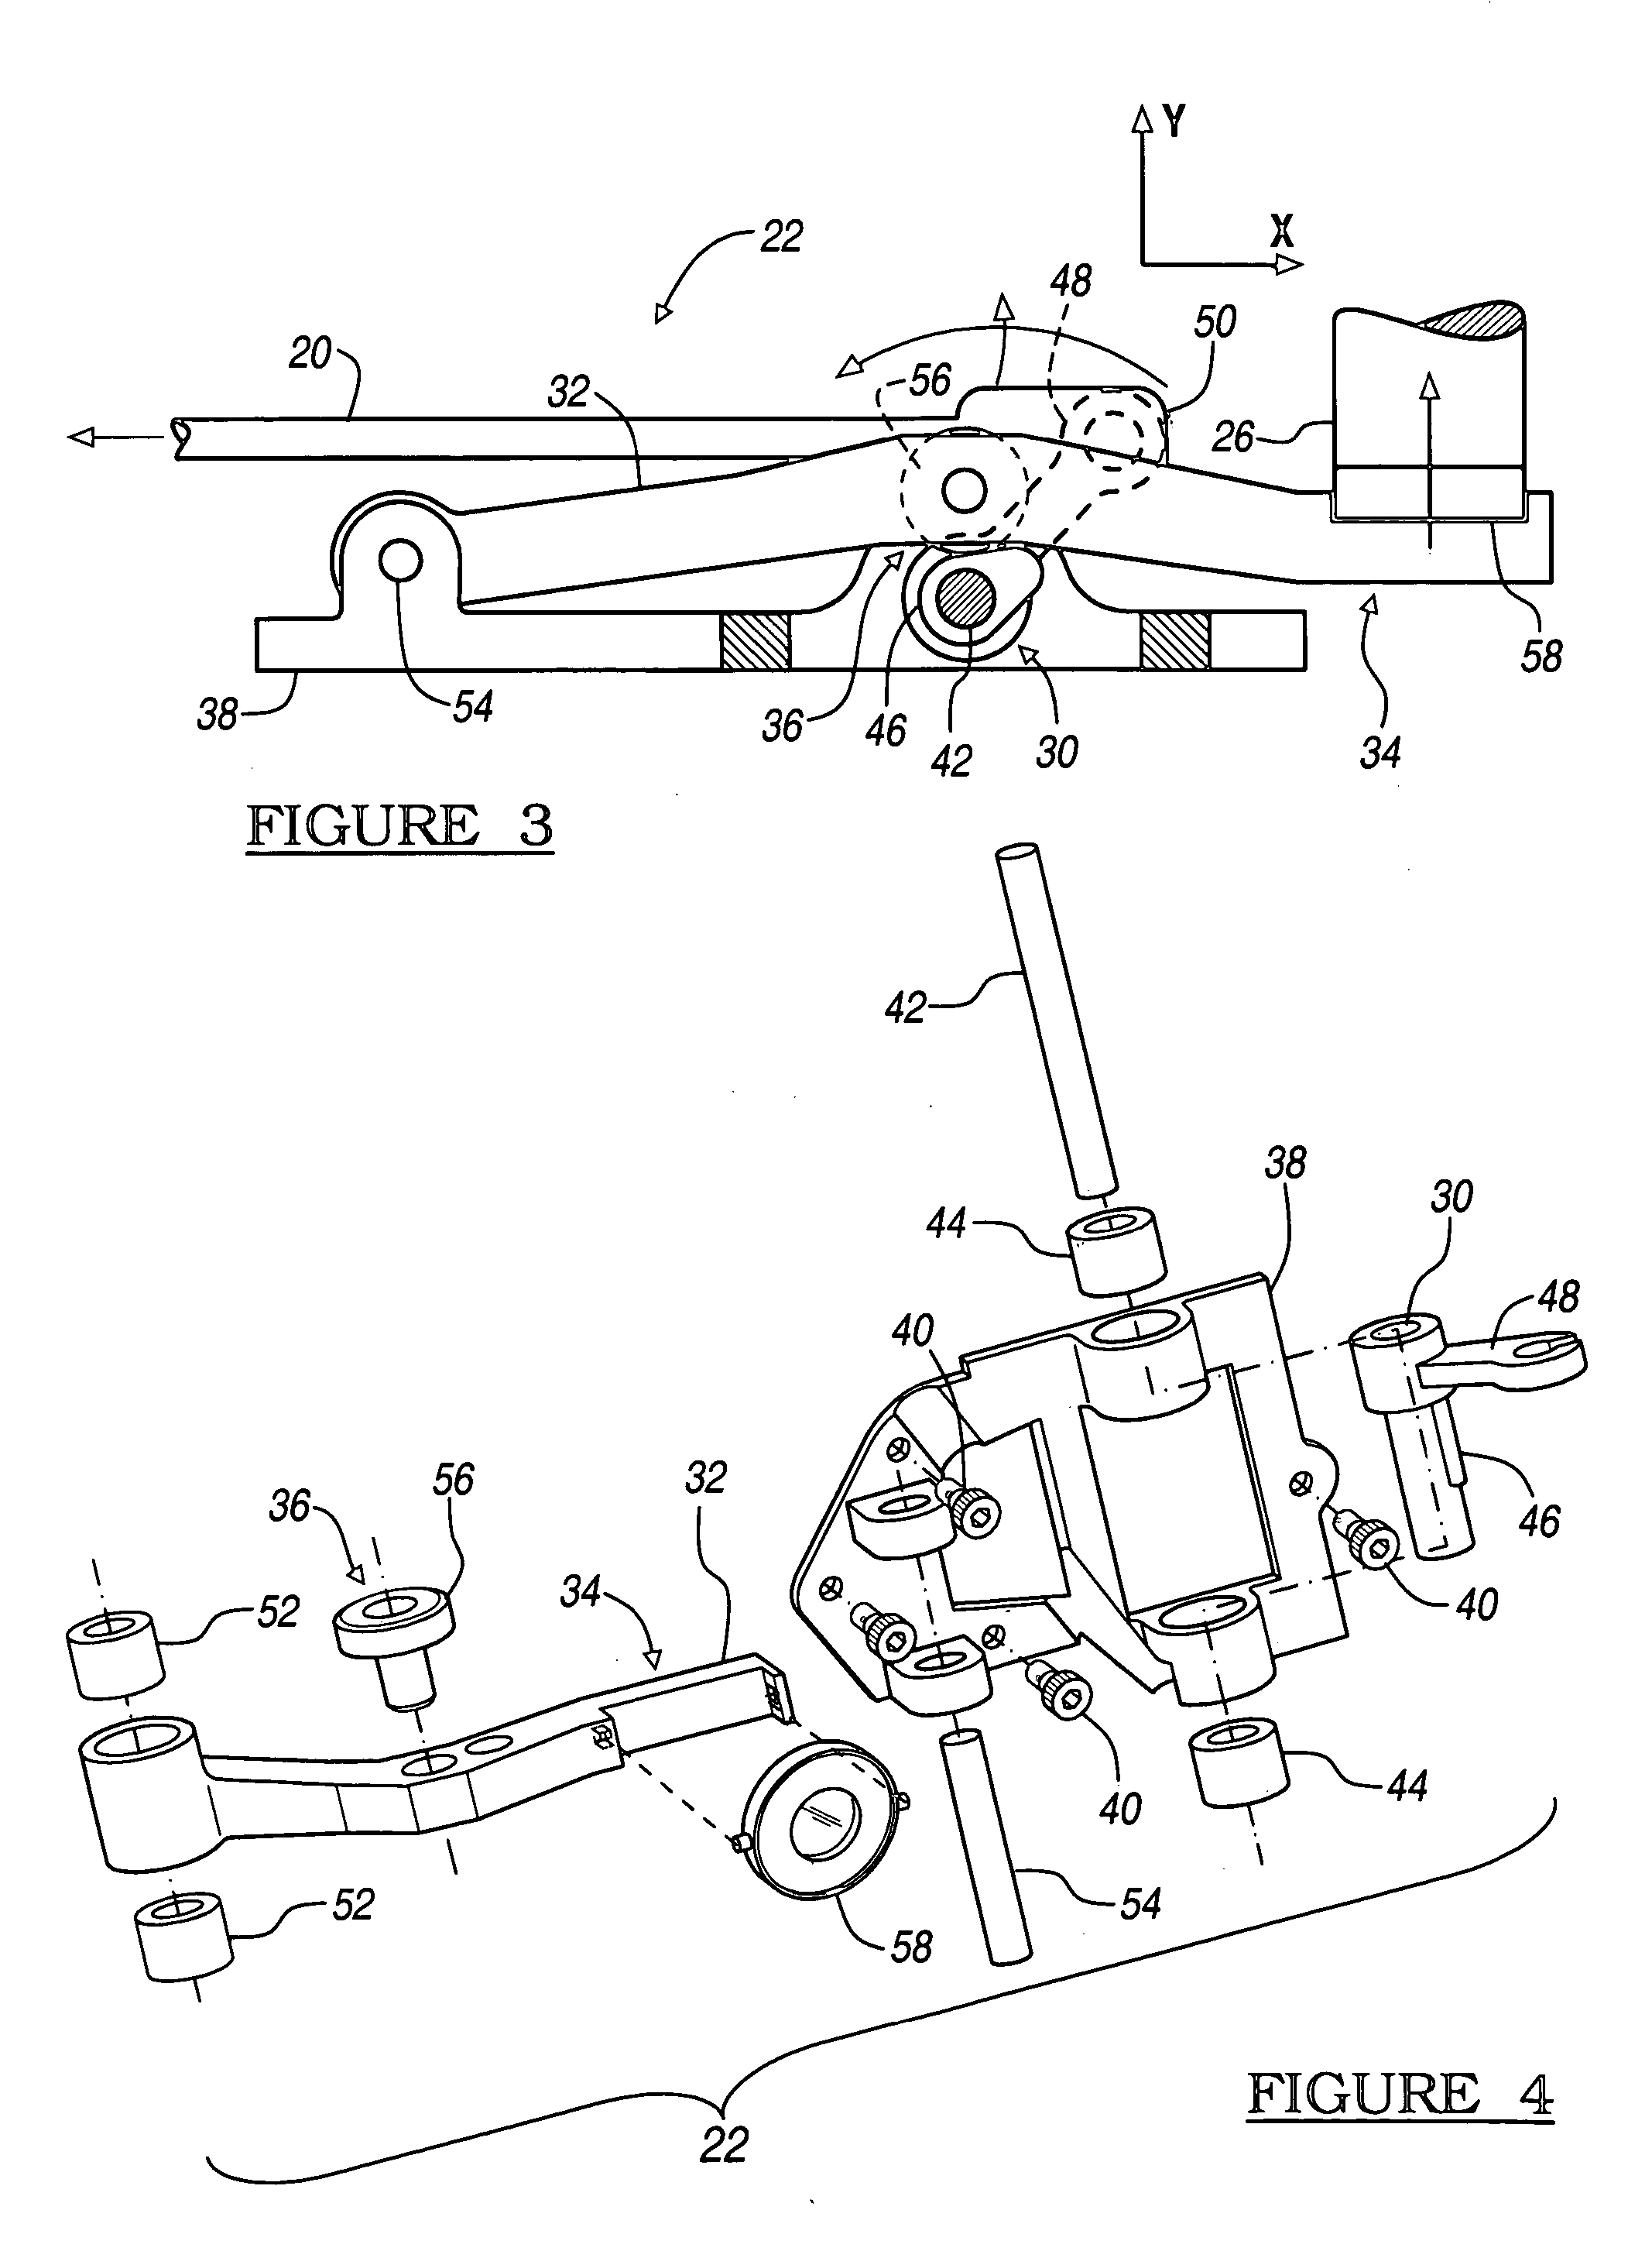 Ergonomic clutch actuator